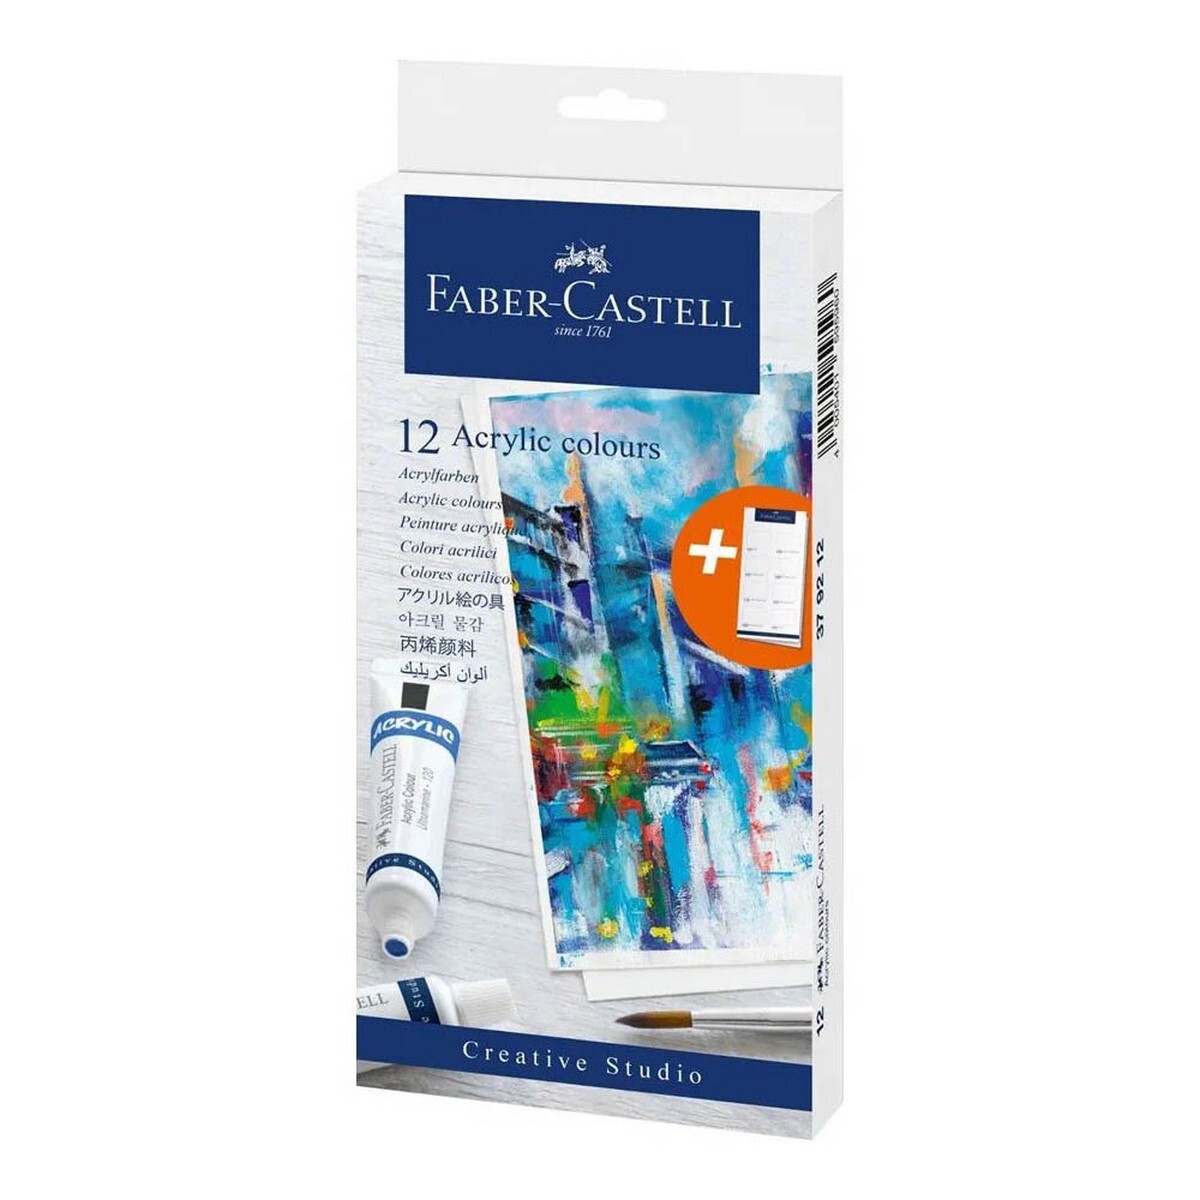 Faber Castell Acrylic Tube Colour 12s - 1490/379012